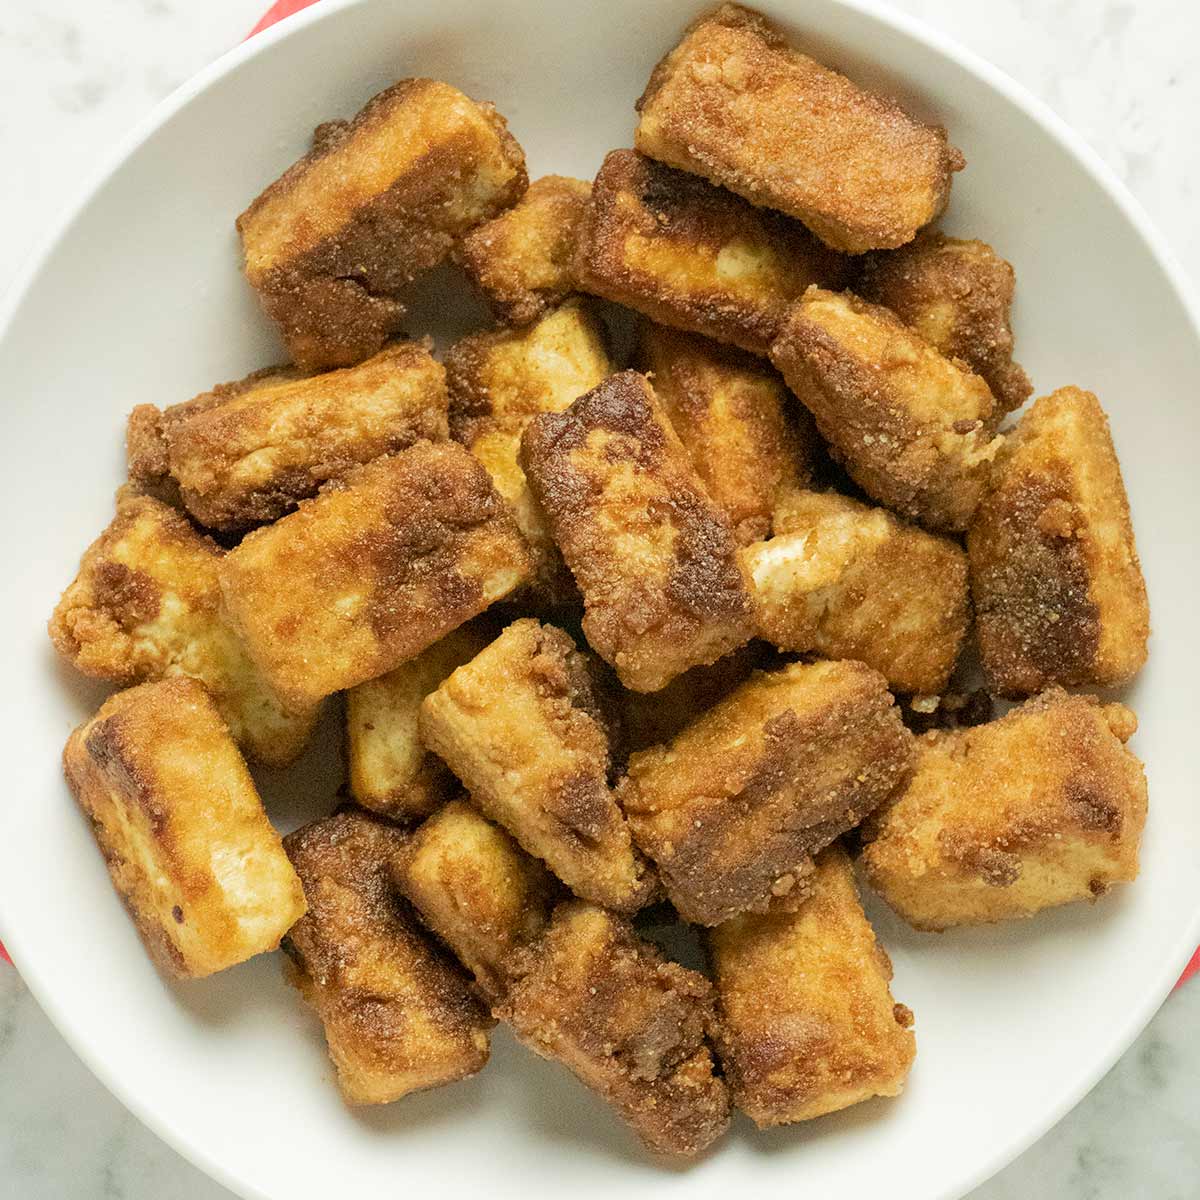 Vegan crispy tofu that's better than takeout